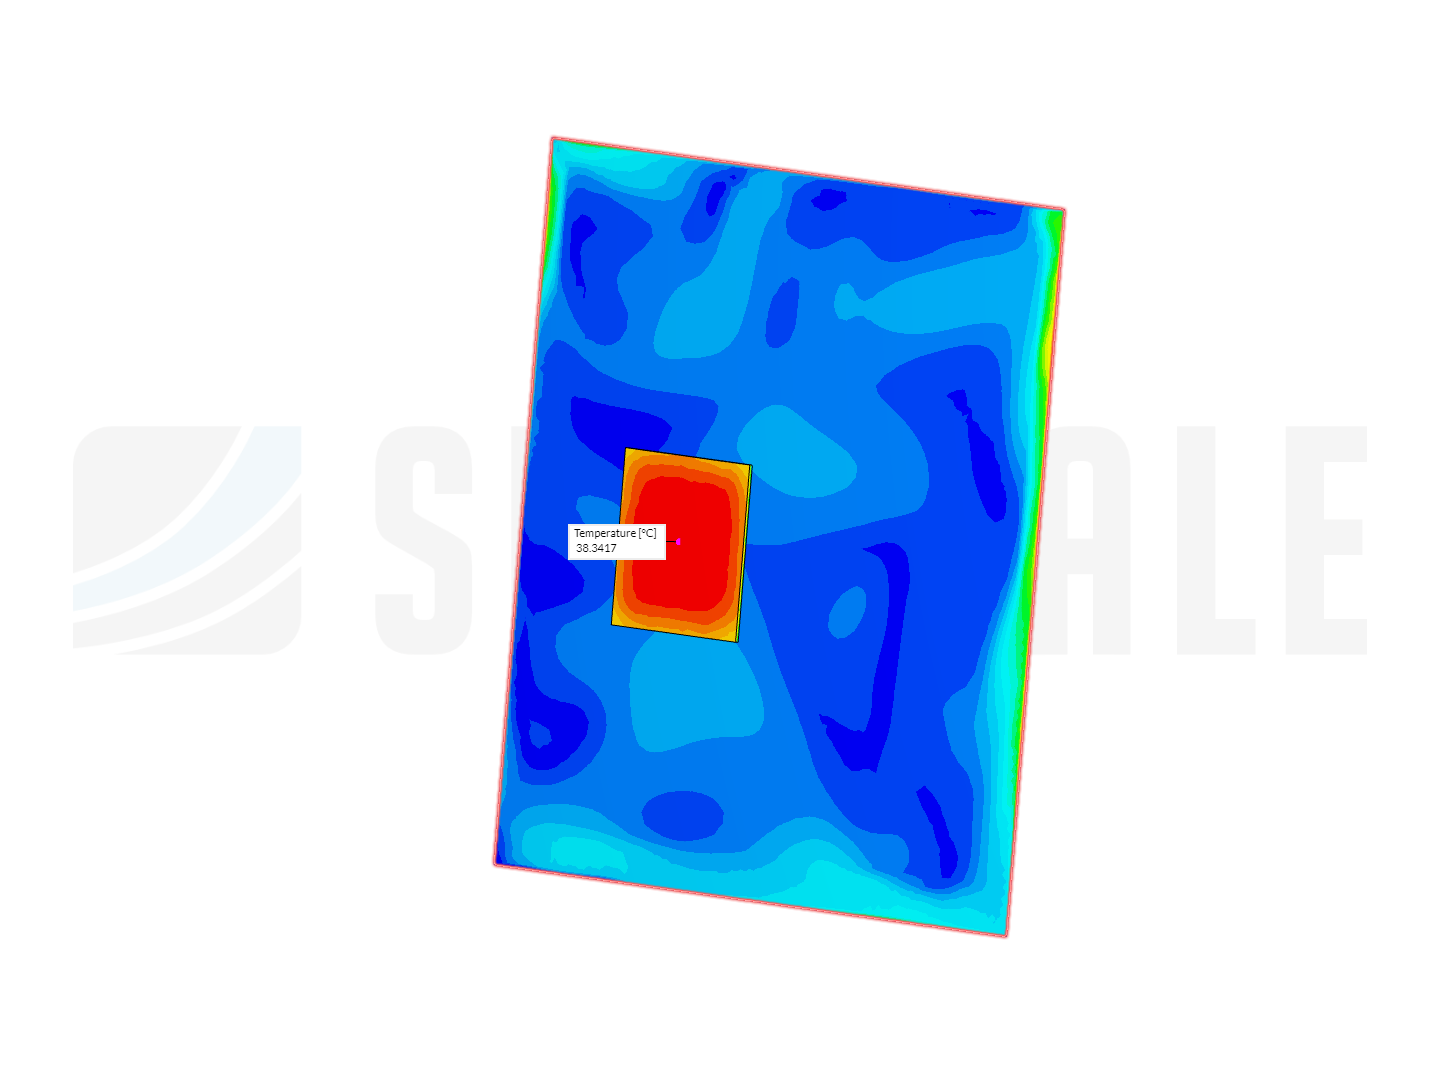 Wet plate heat exchange CHT simulation image